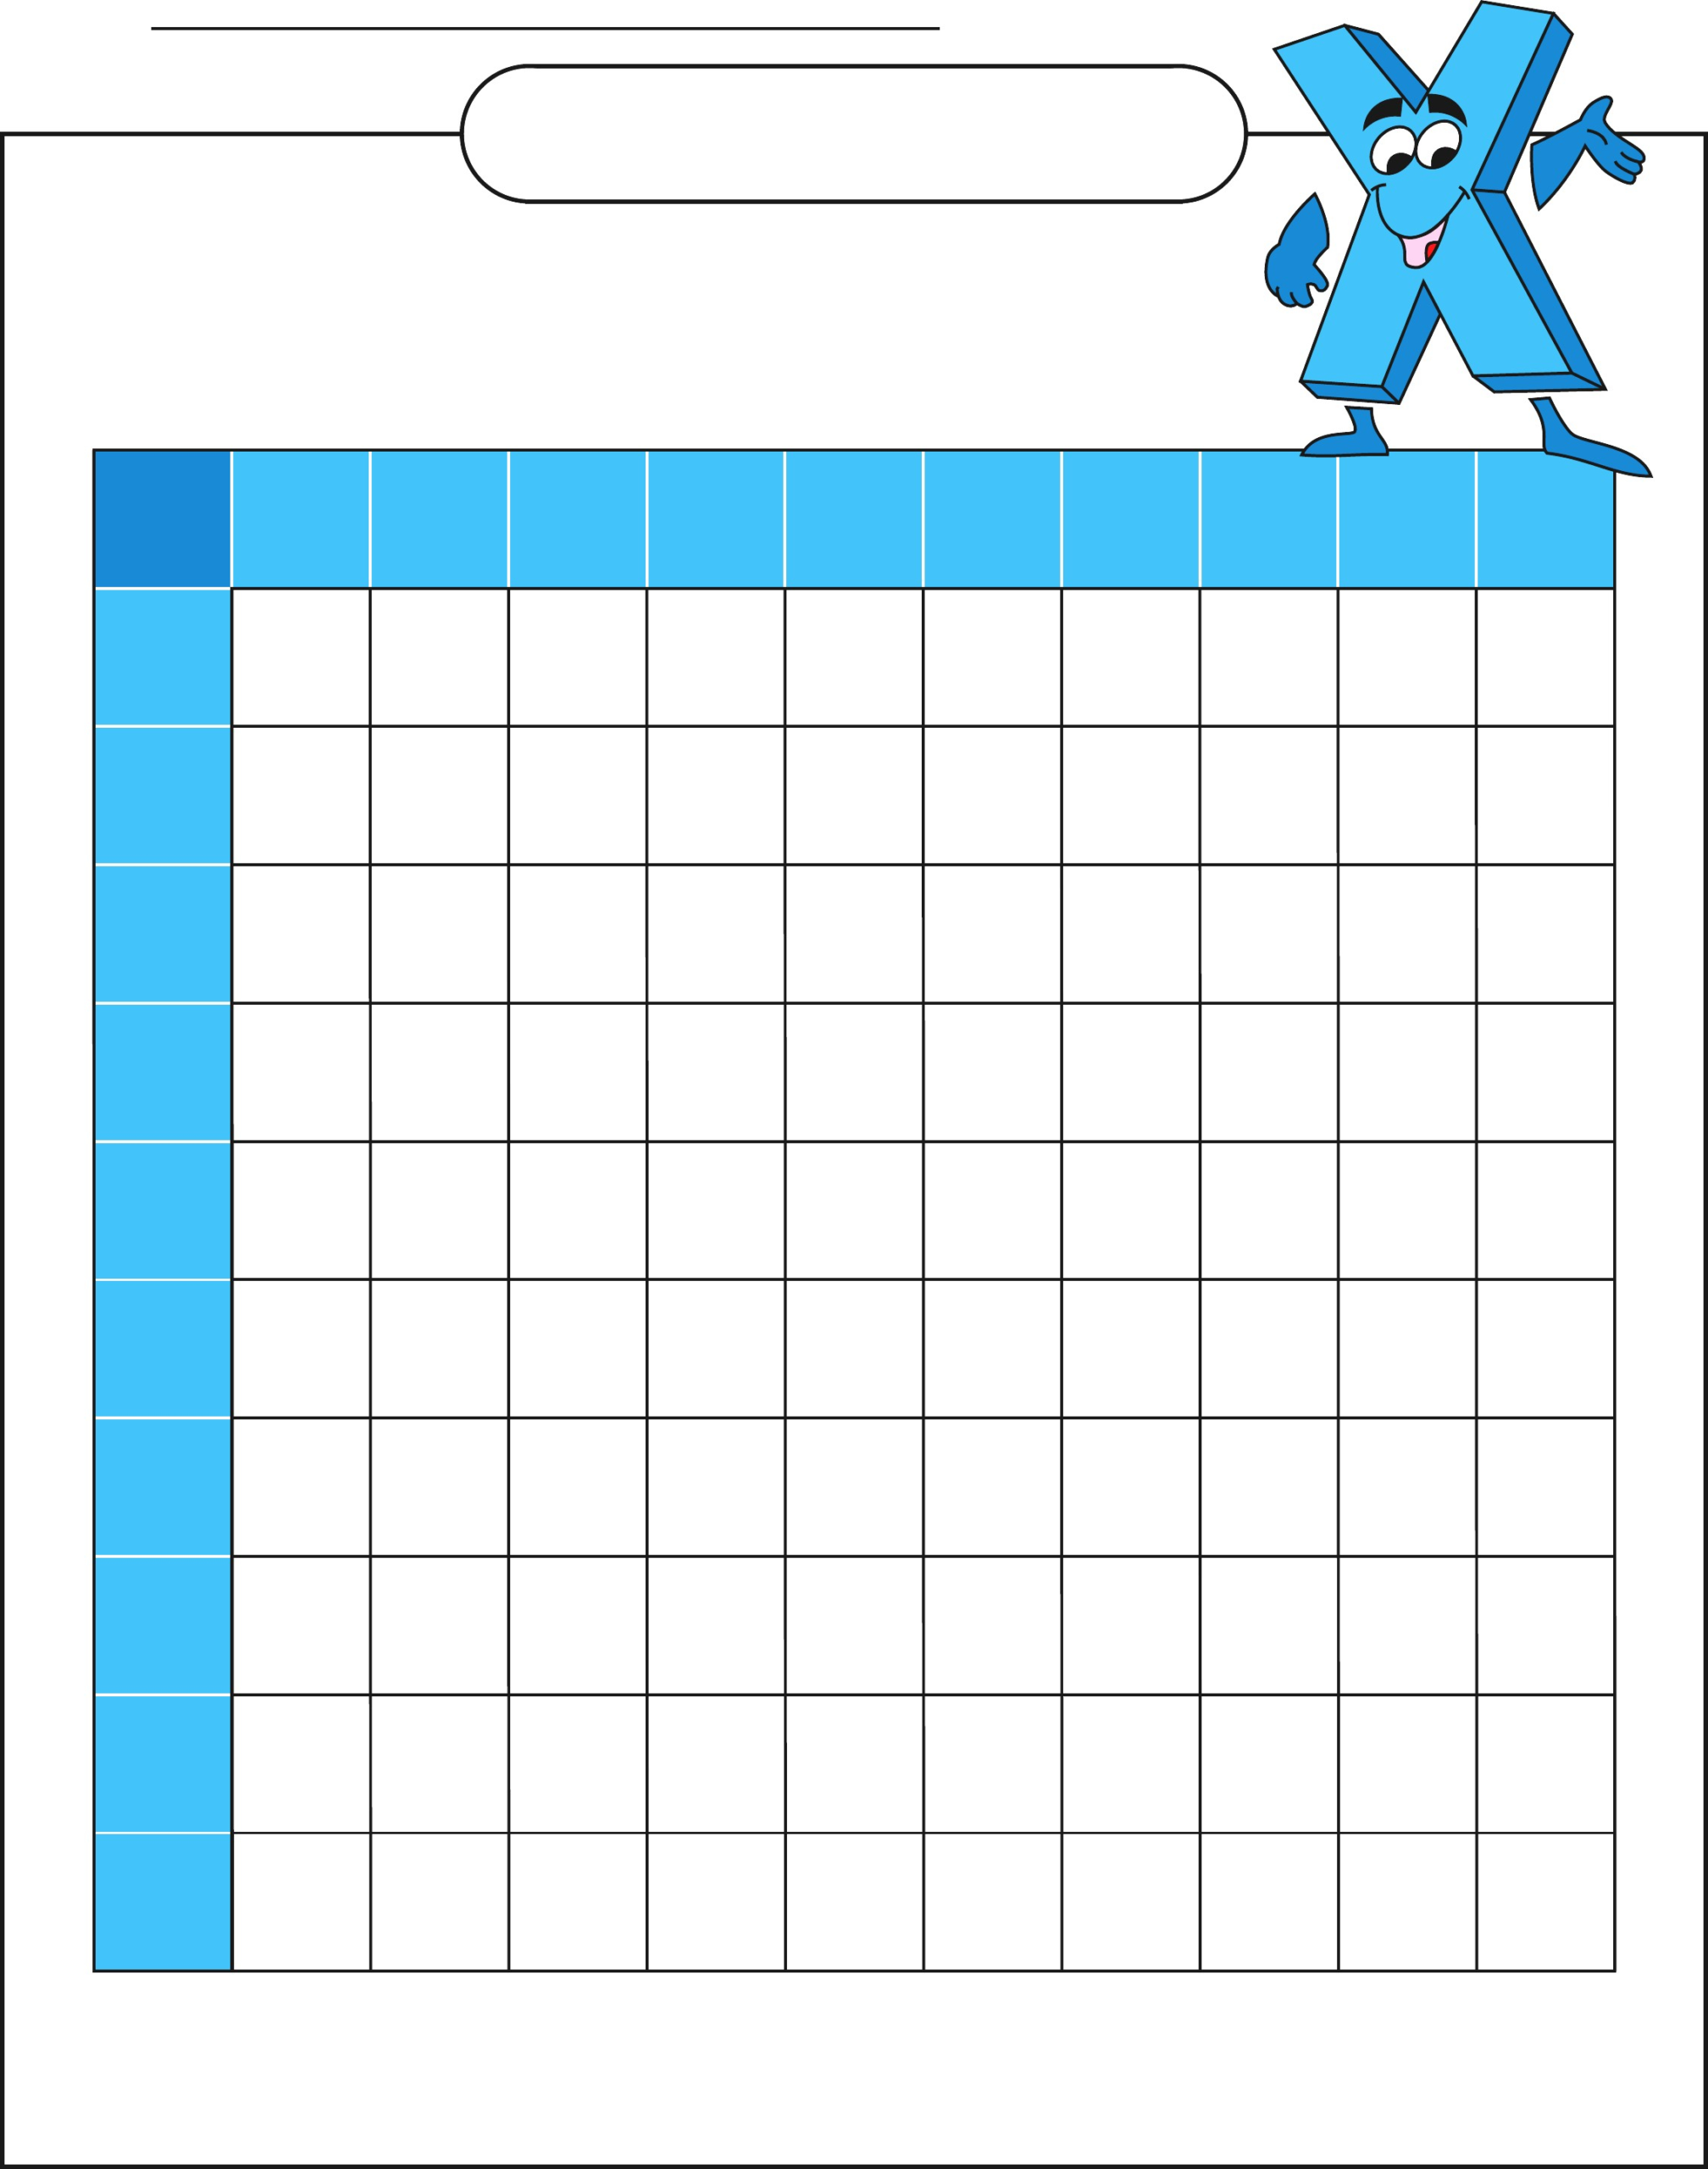 Blank Multiplication Table Image 9